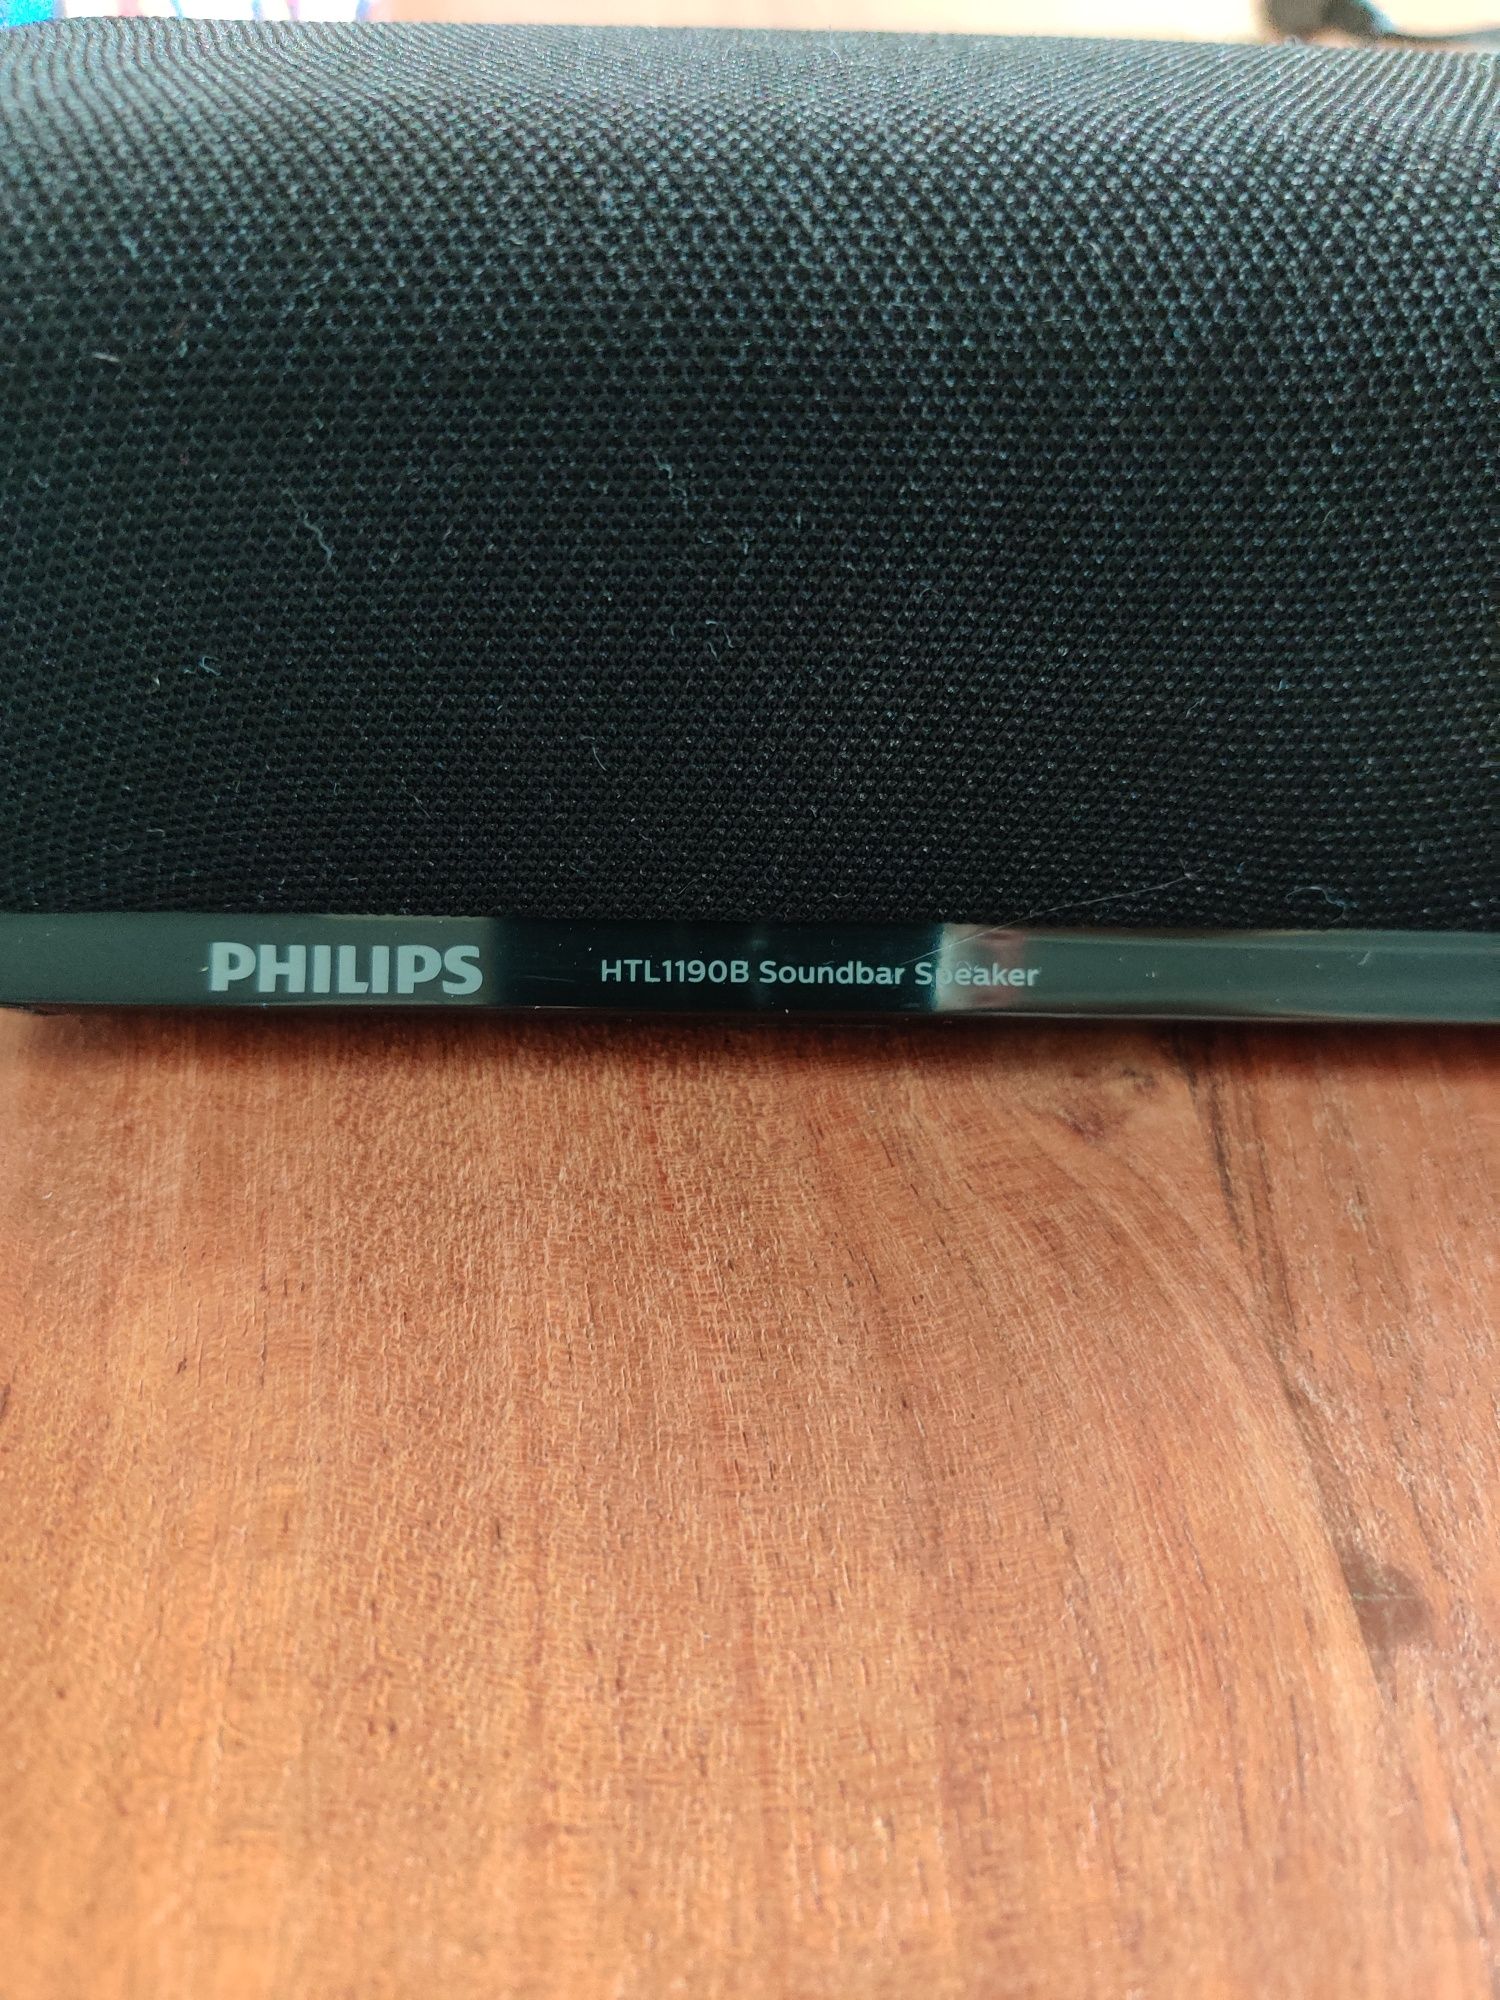 Soundbar Phillips HTL1190B